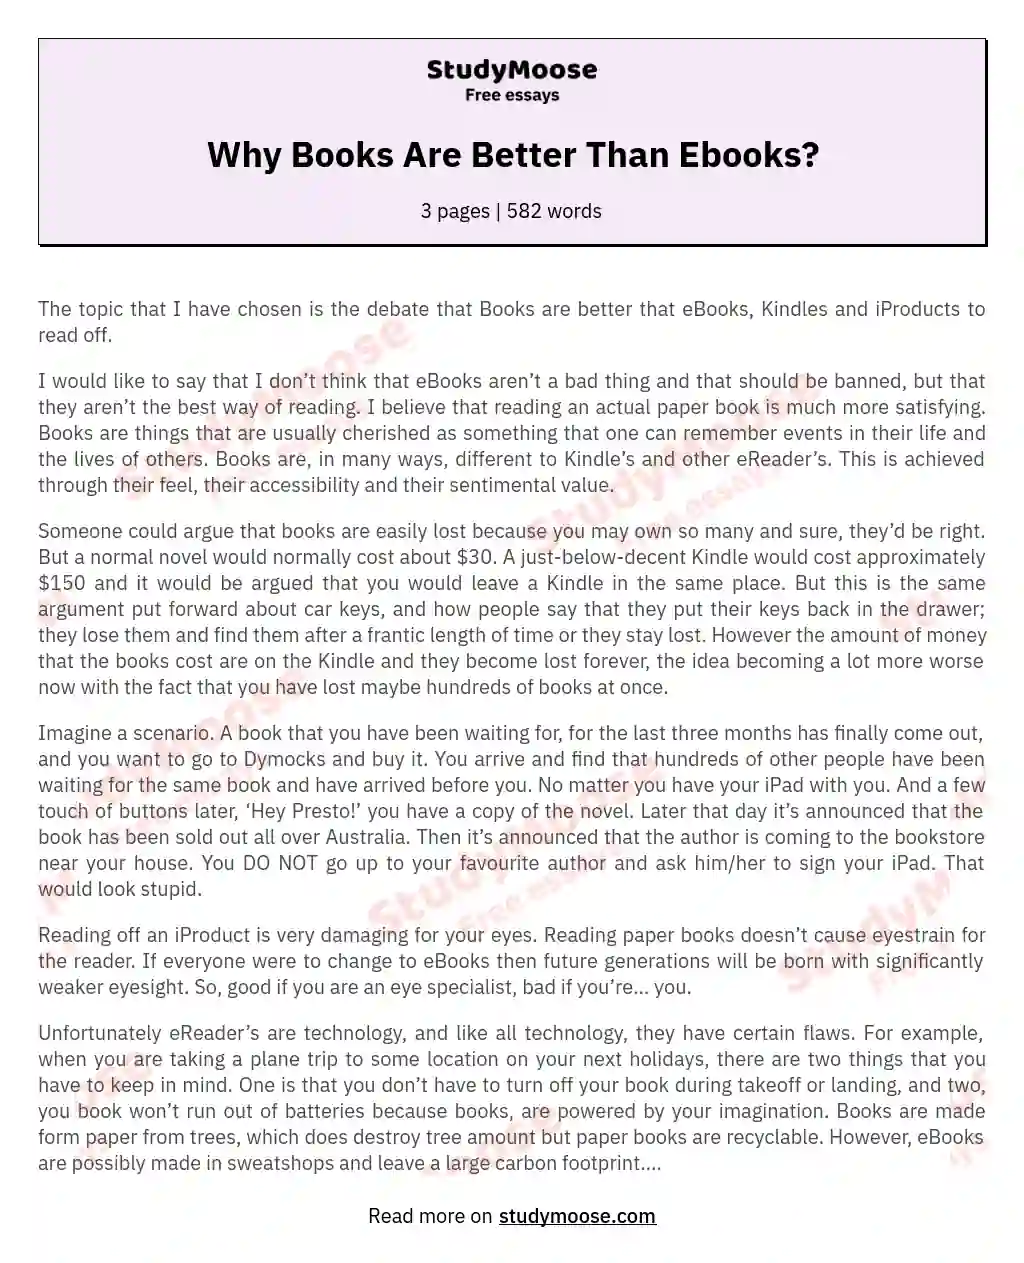 books vs ebooks essay